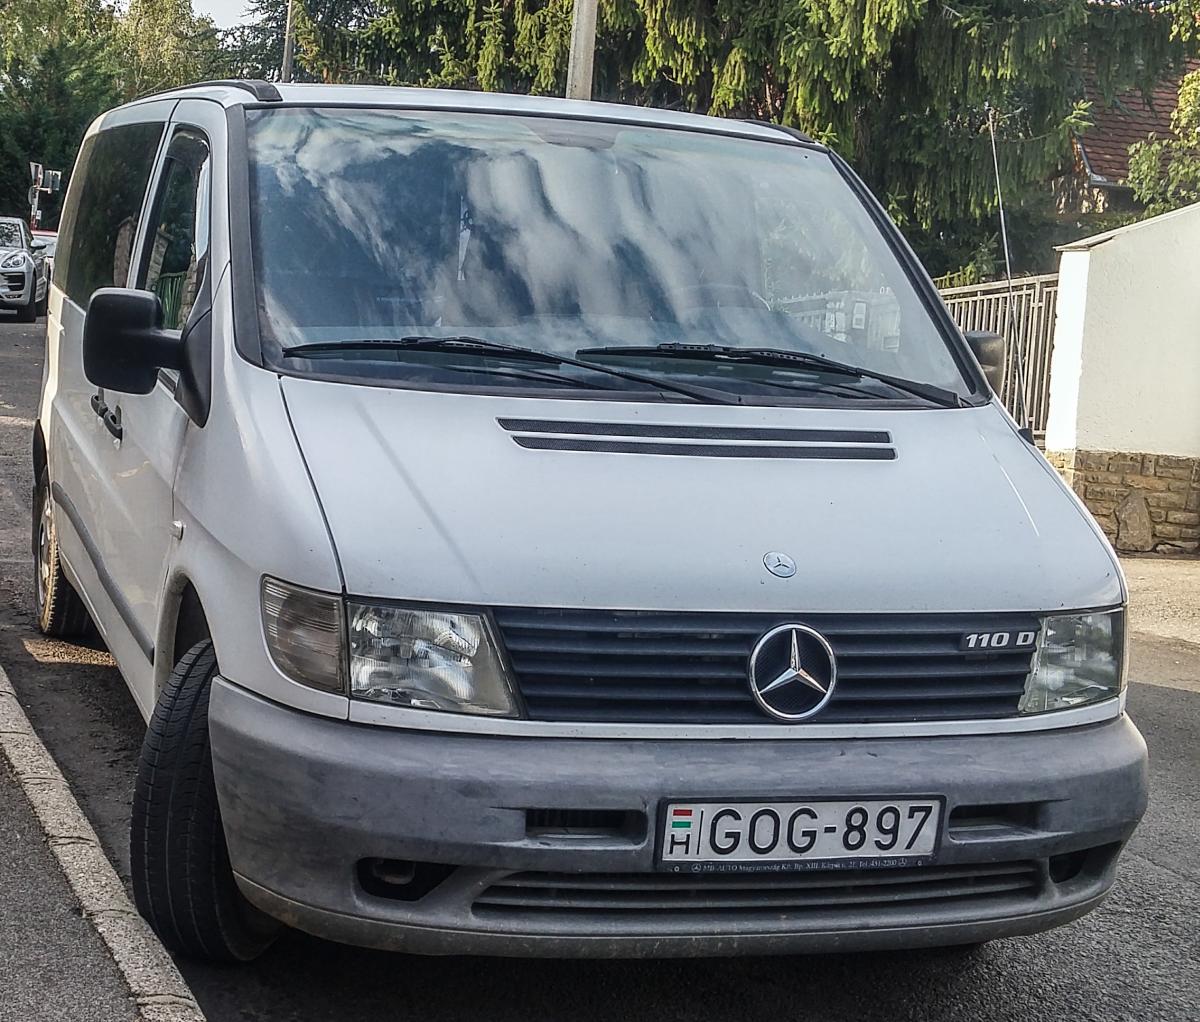 Mercedes-Benz Vito. Foto: Pécs (HU), Sommer 2019.